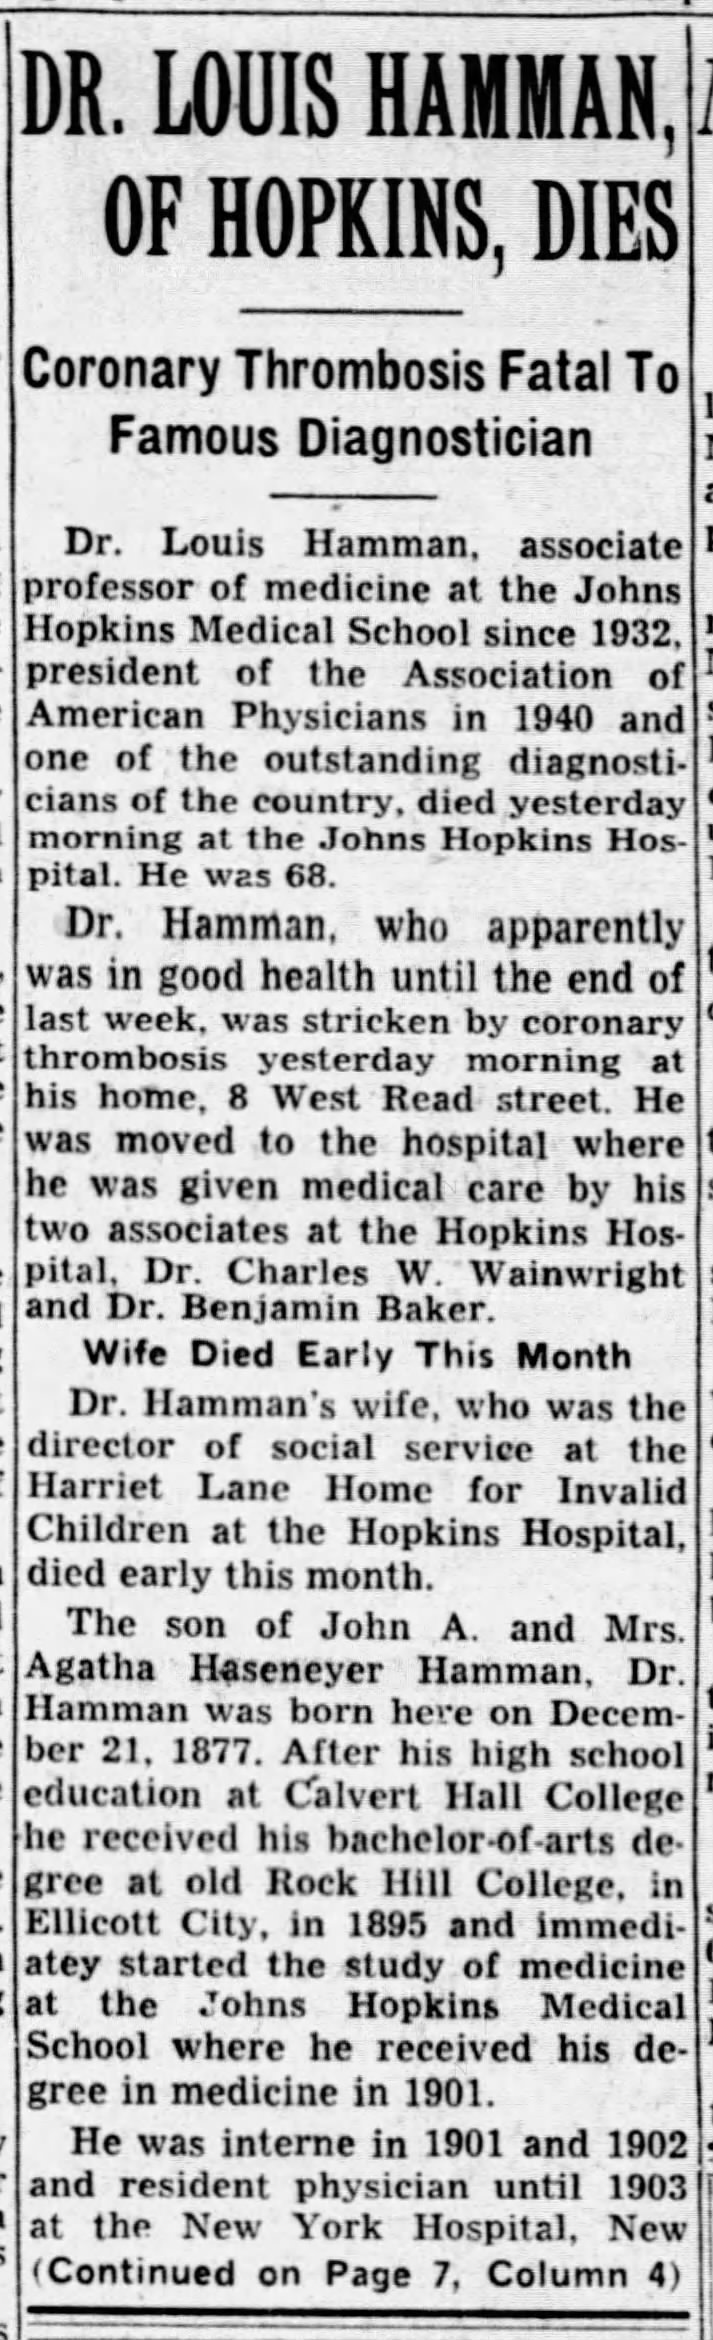 Dr. Louis Hamman, of Hopkins, Dies; 29 Apr 1946; The Baltimore Sun; 24